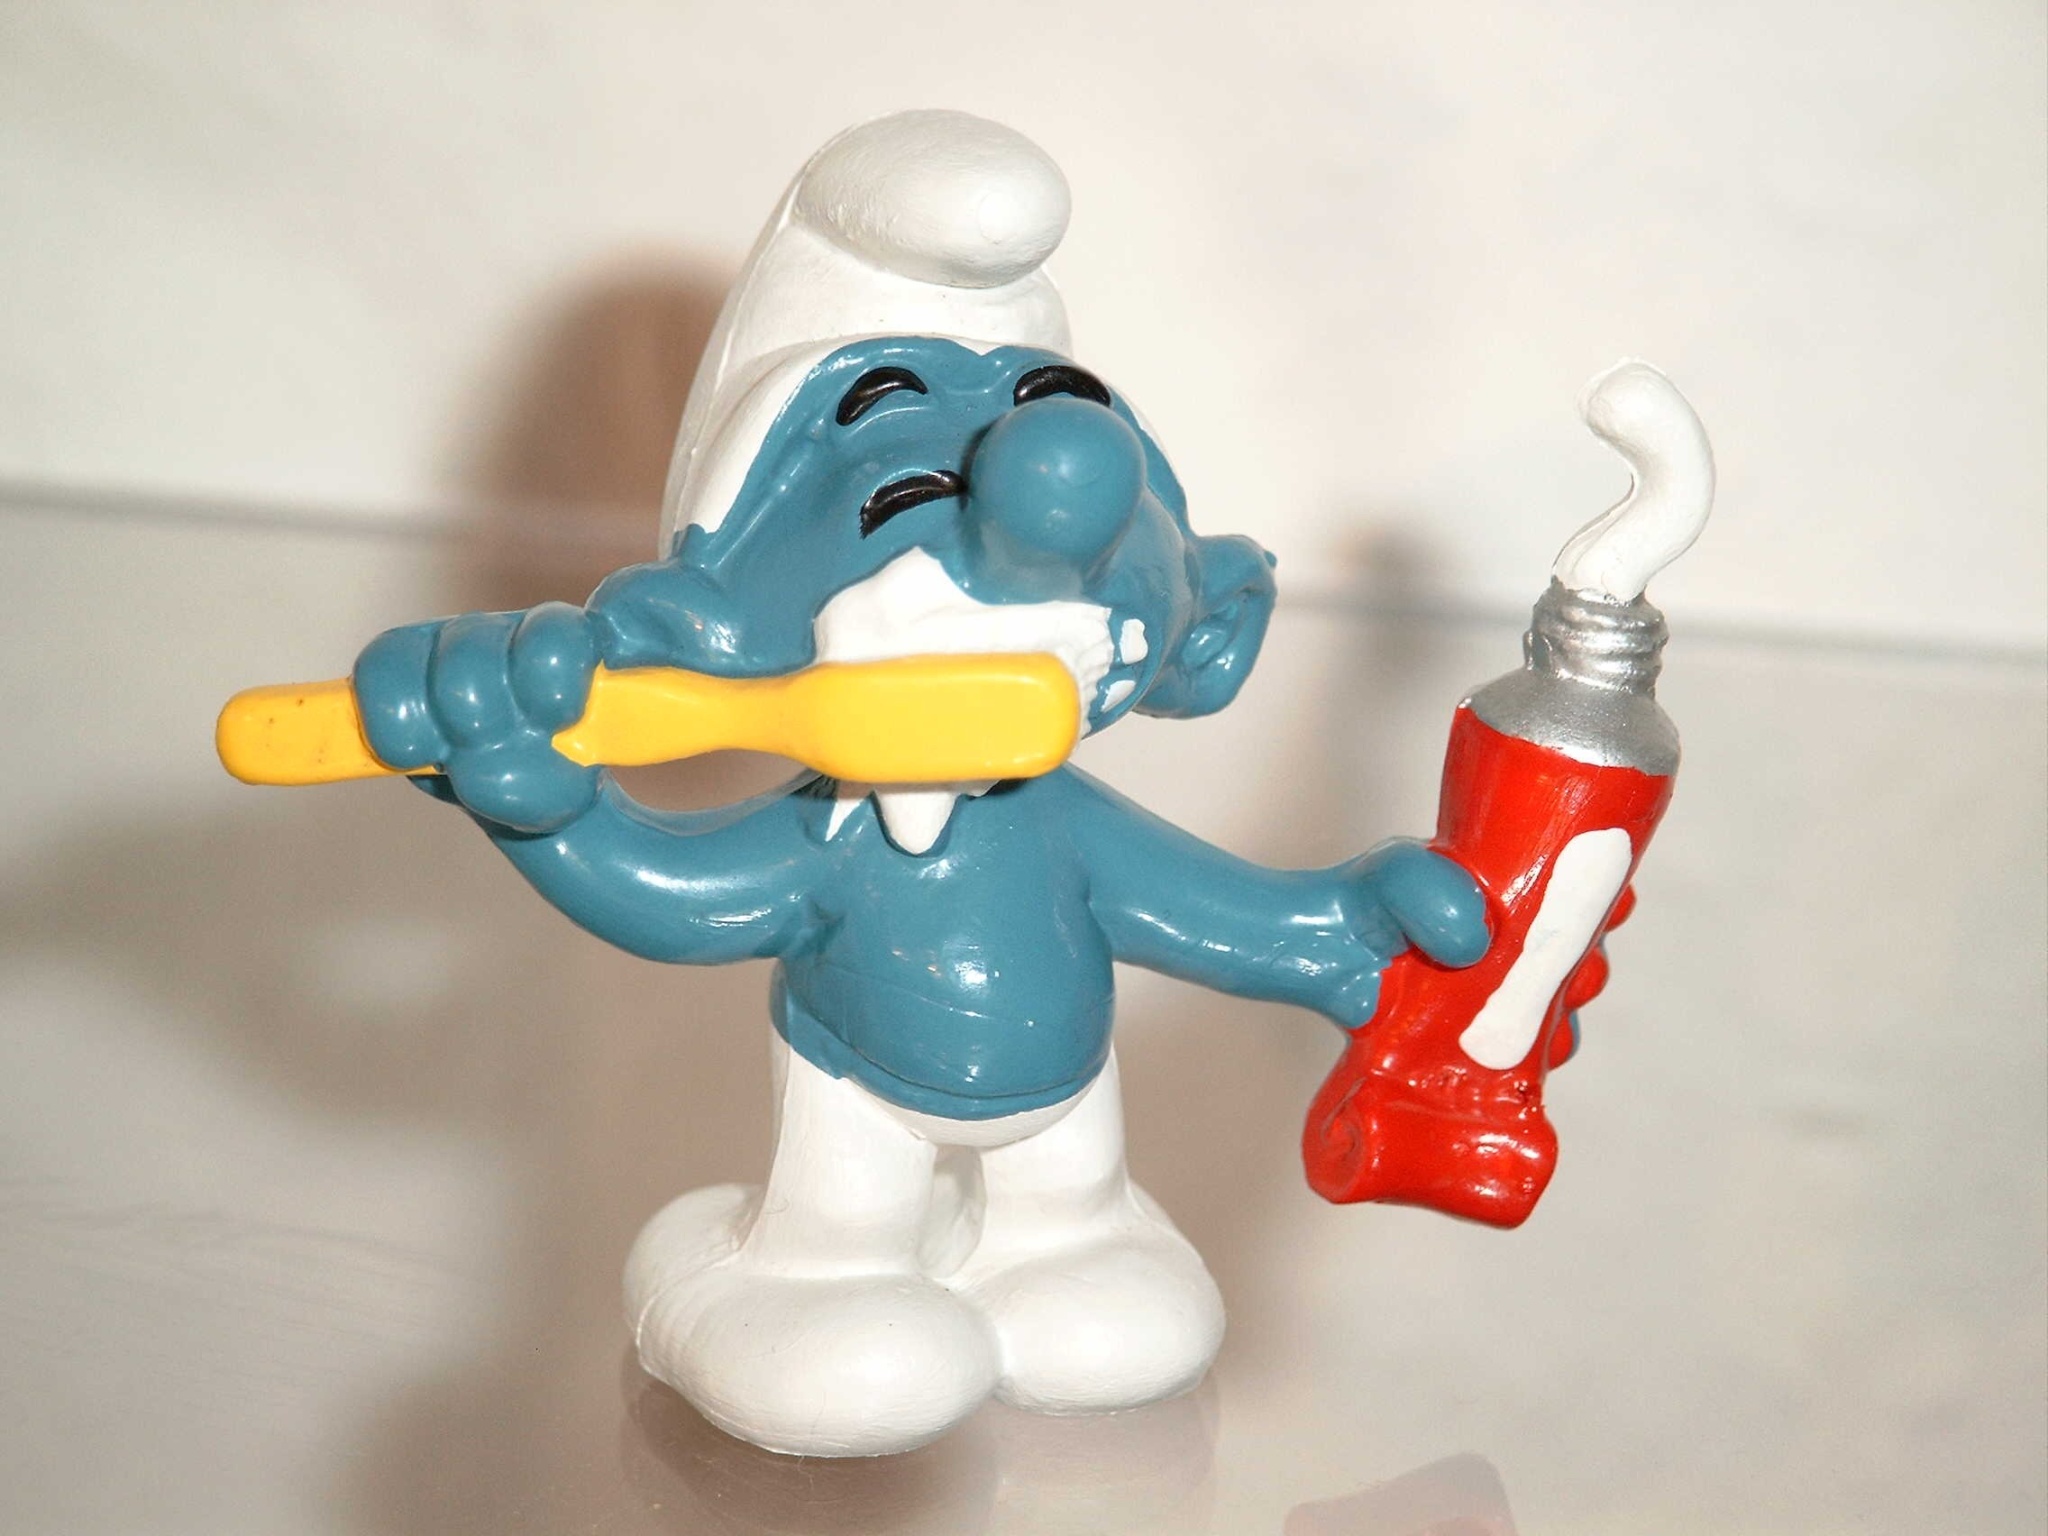 machine-toy-figurine-action-figure-smurf-toothbrush-1025485-pxhere.com.jpg